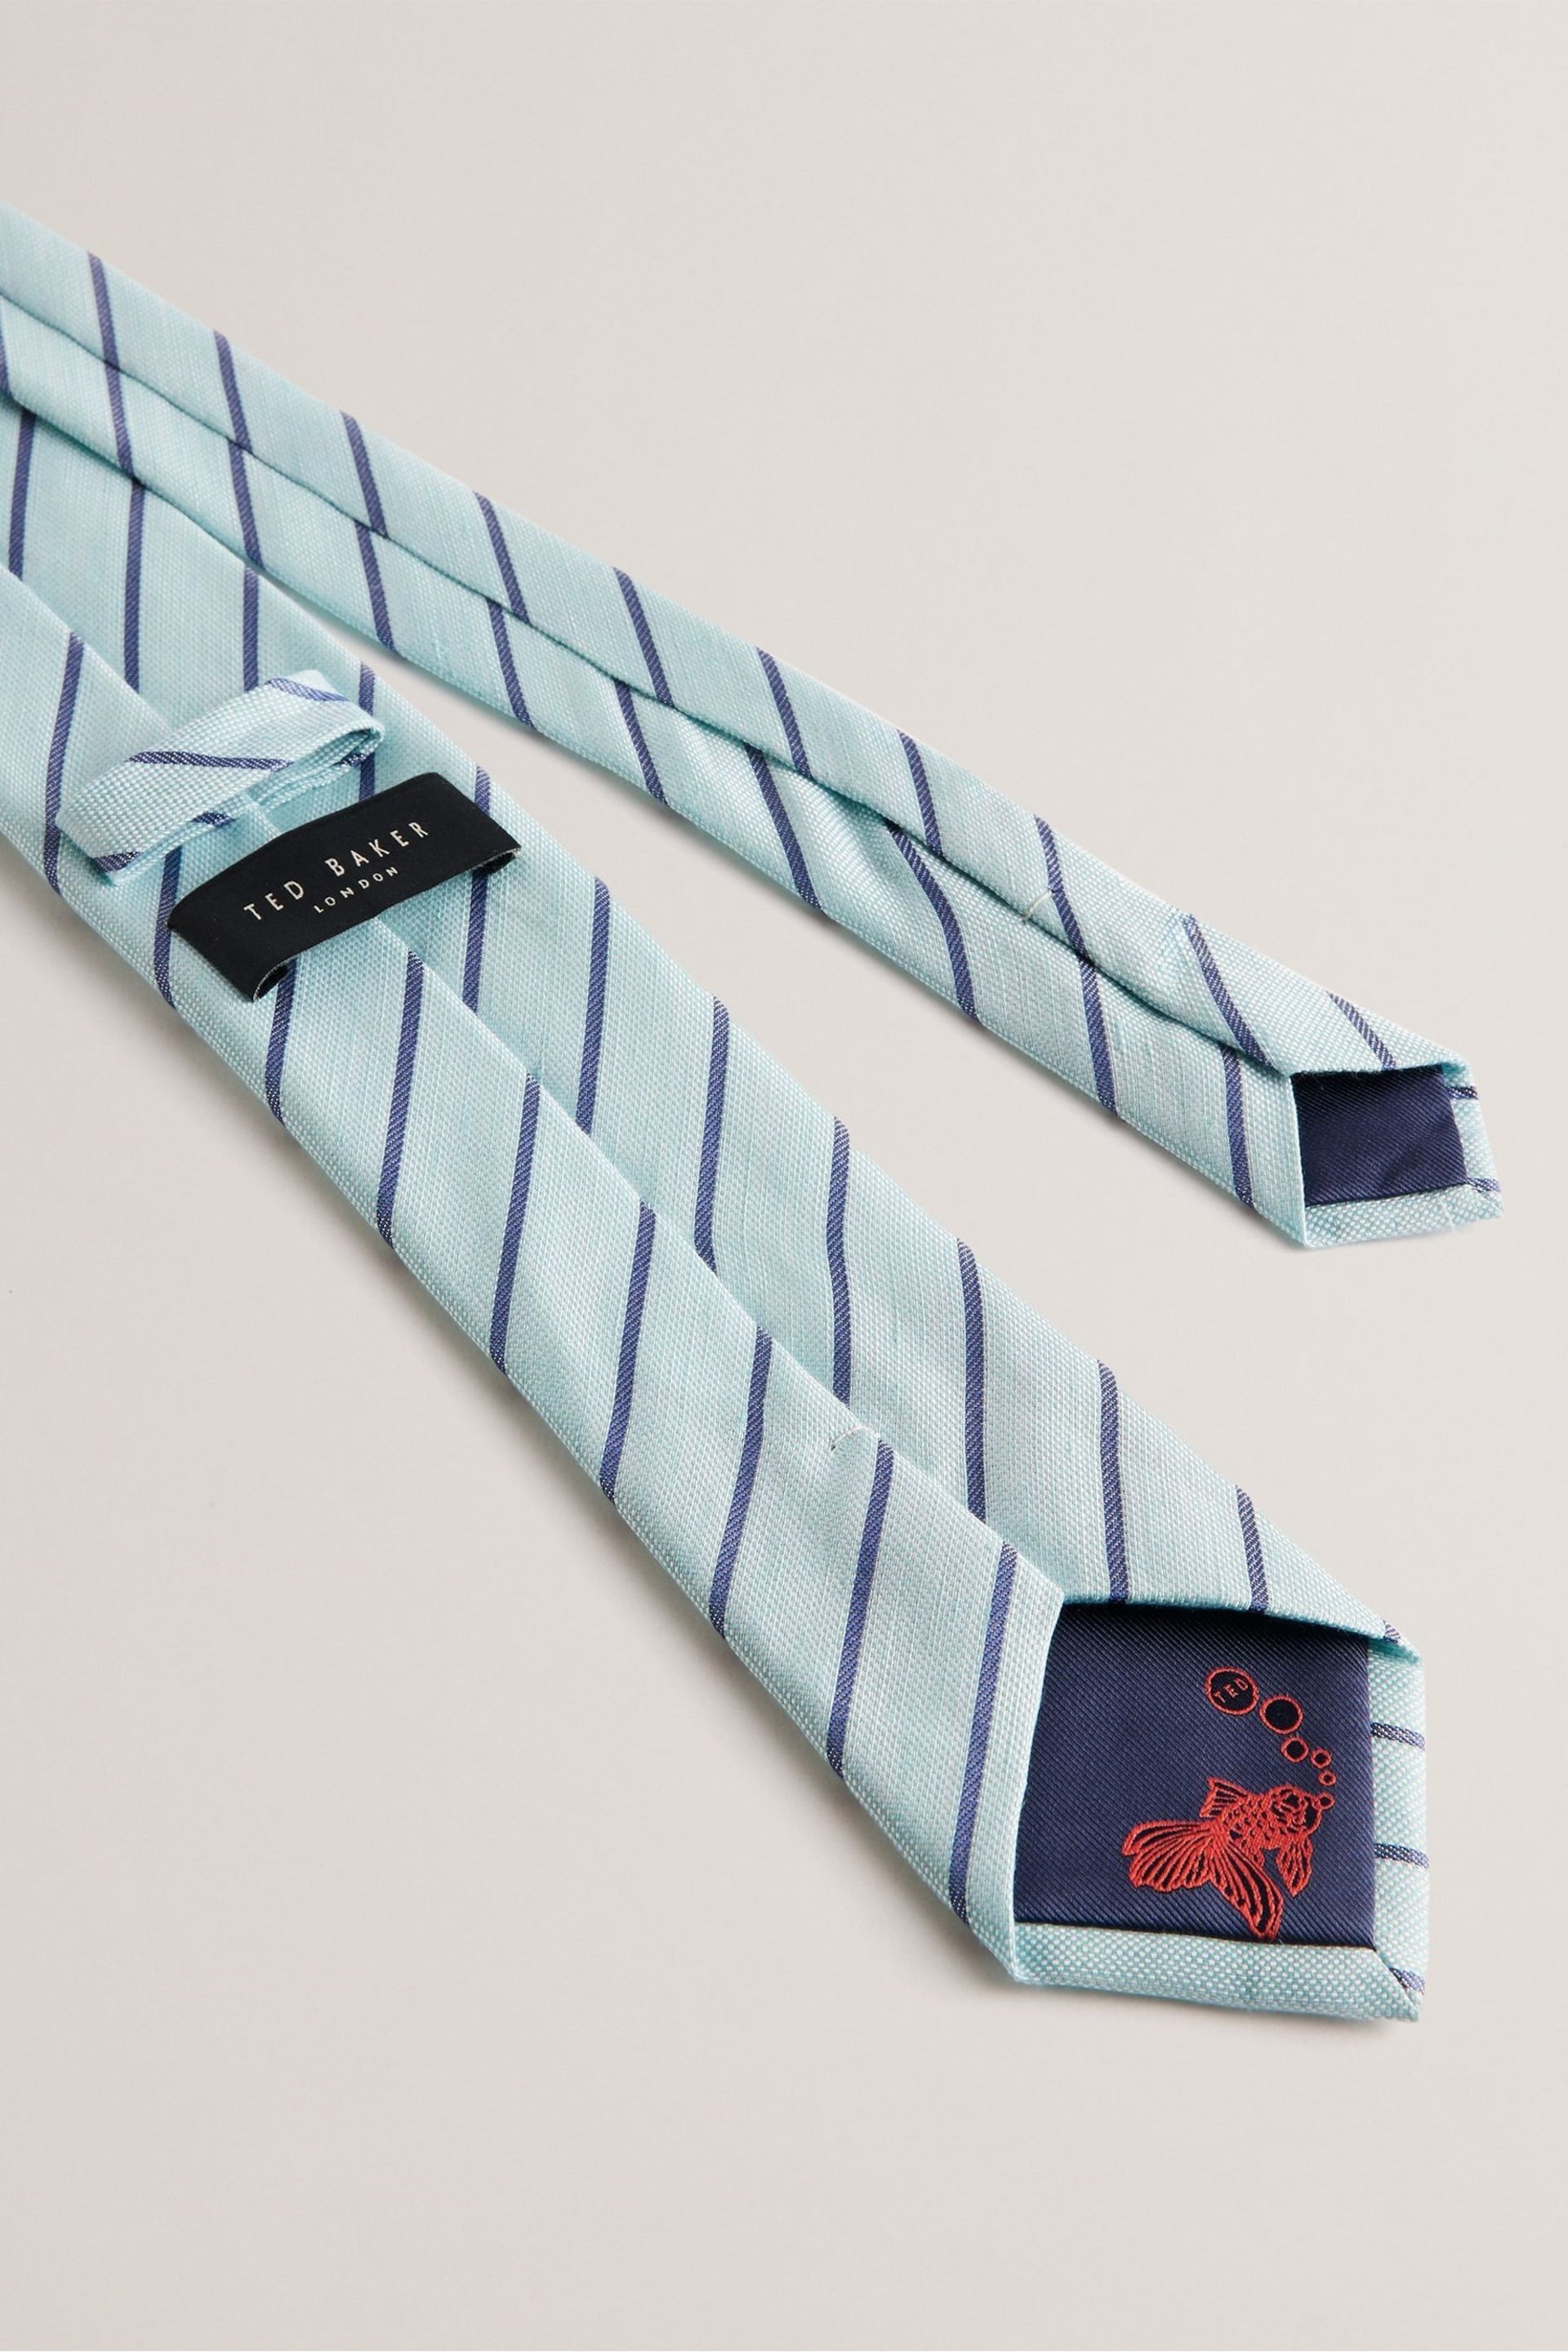 Ted Baker Green Niels Linen Stripe Silk Tie - Image 3 of 3